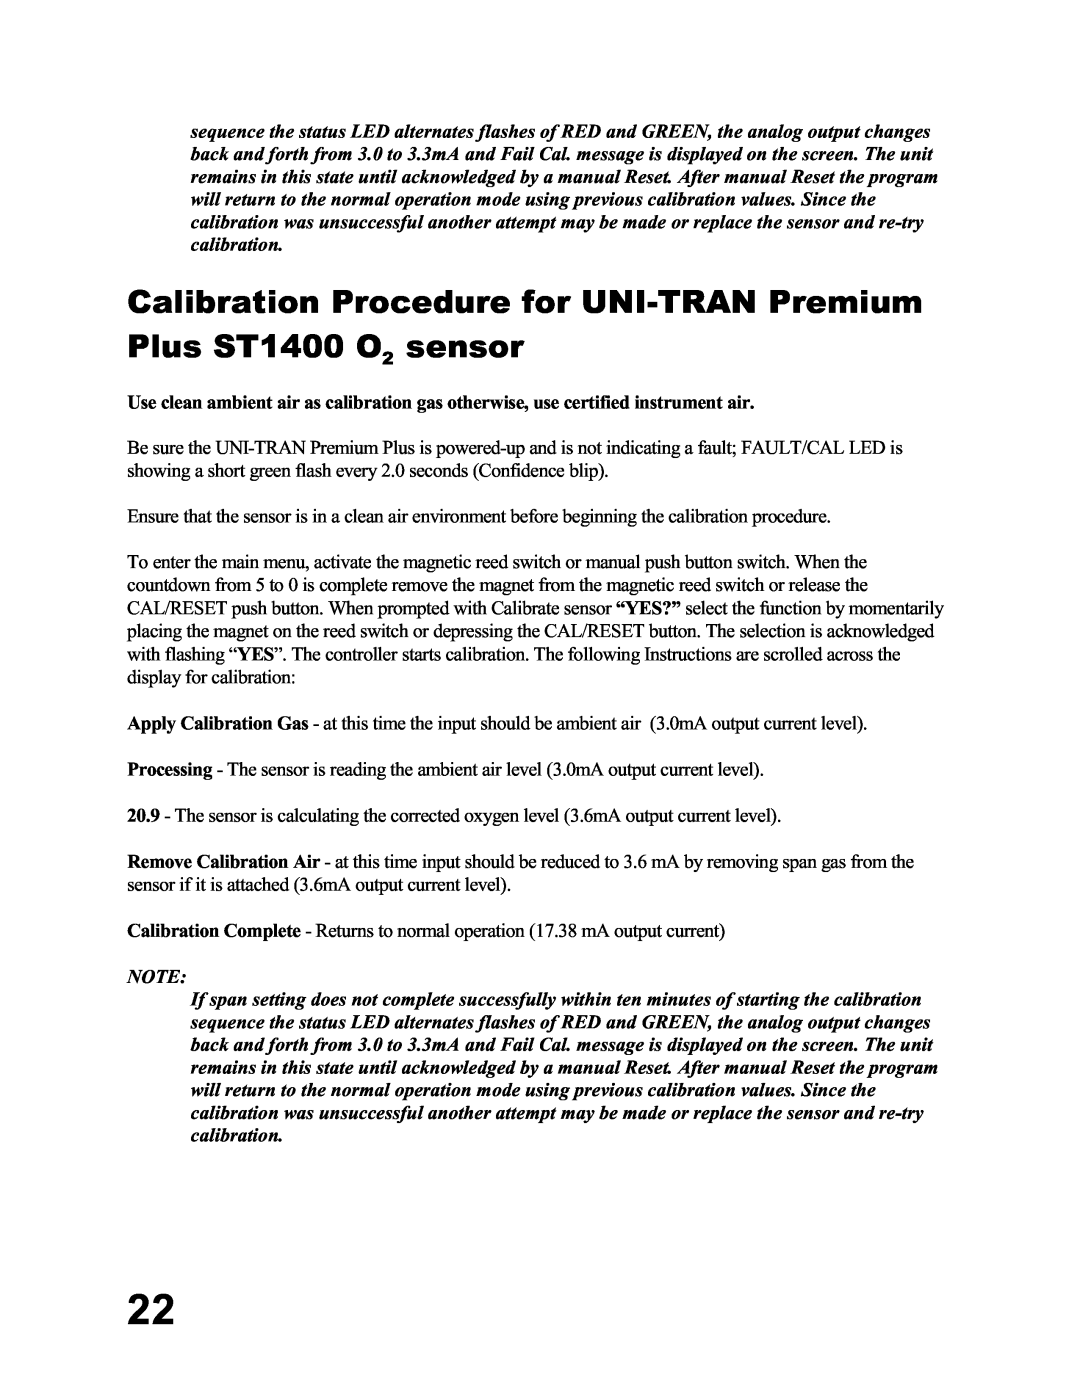 Emerson UT-P+-STXXXX, MA N-00 05-00 user manual Calibration Procedure for UNI-TRANPremium, Plus ST1400 O2 sensor 